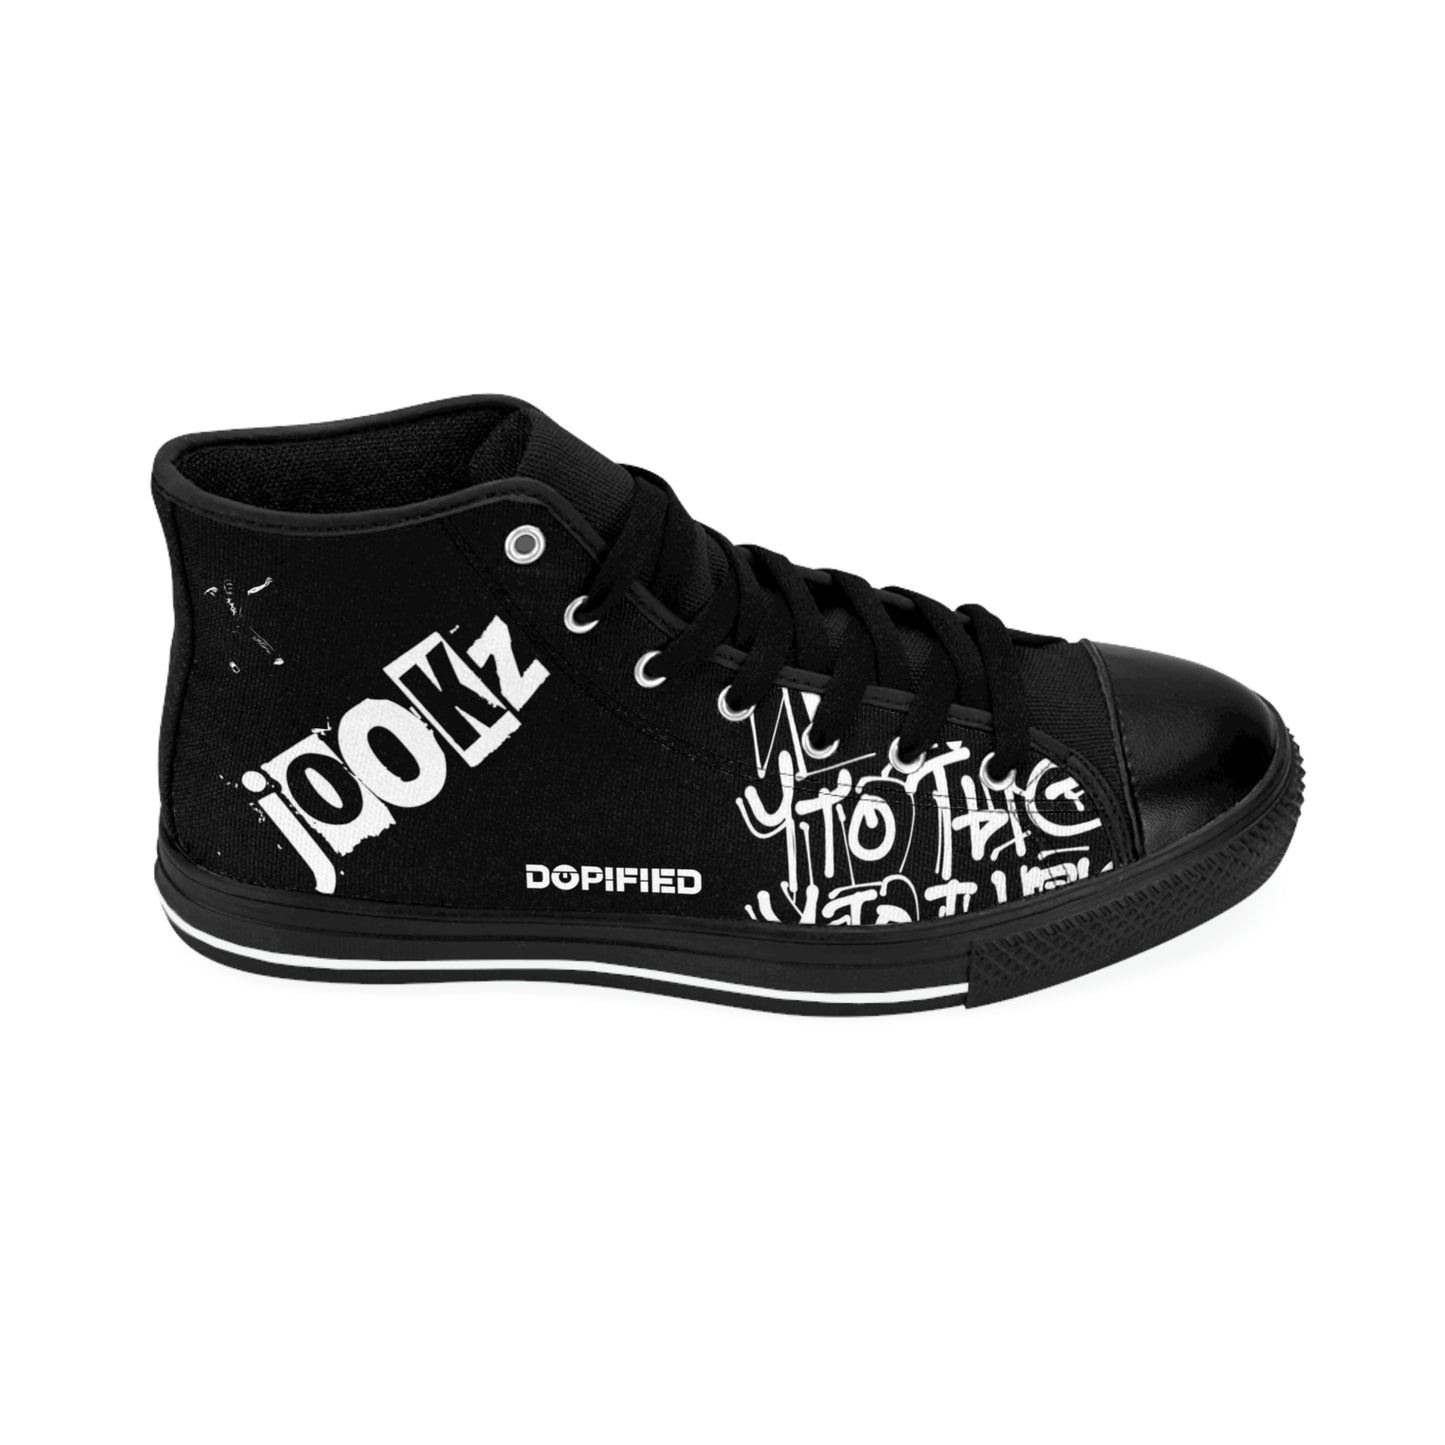 Memphis jOoKz Inspired by Memphis Jookin💯 jOoKz Classic Sneakers